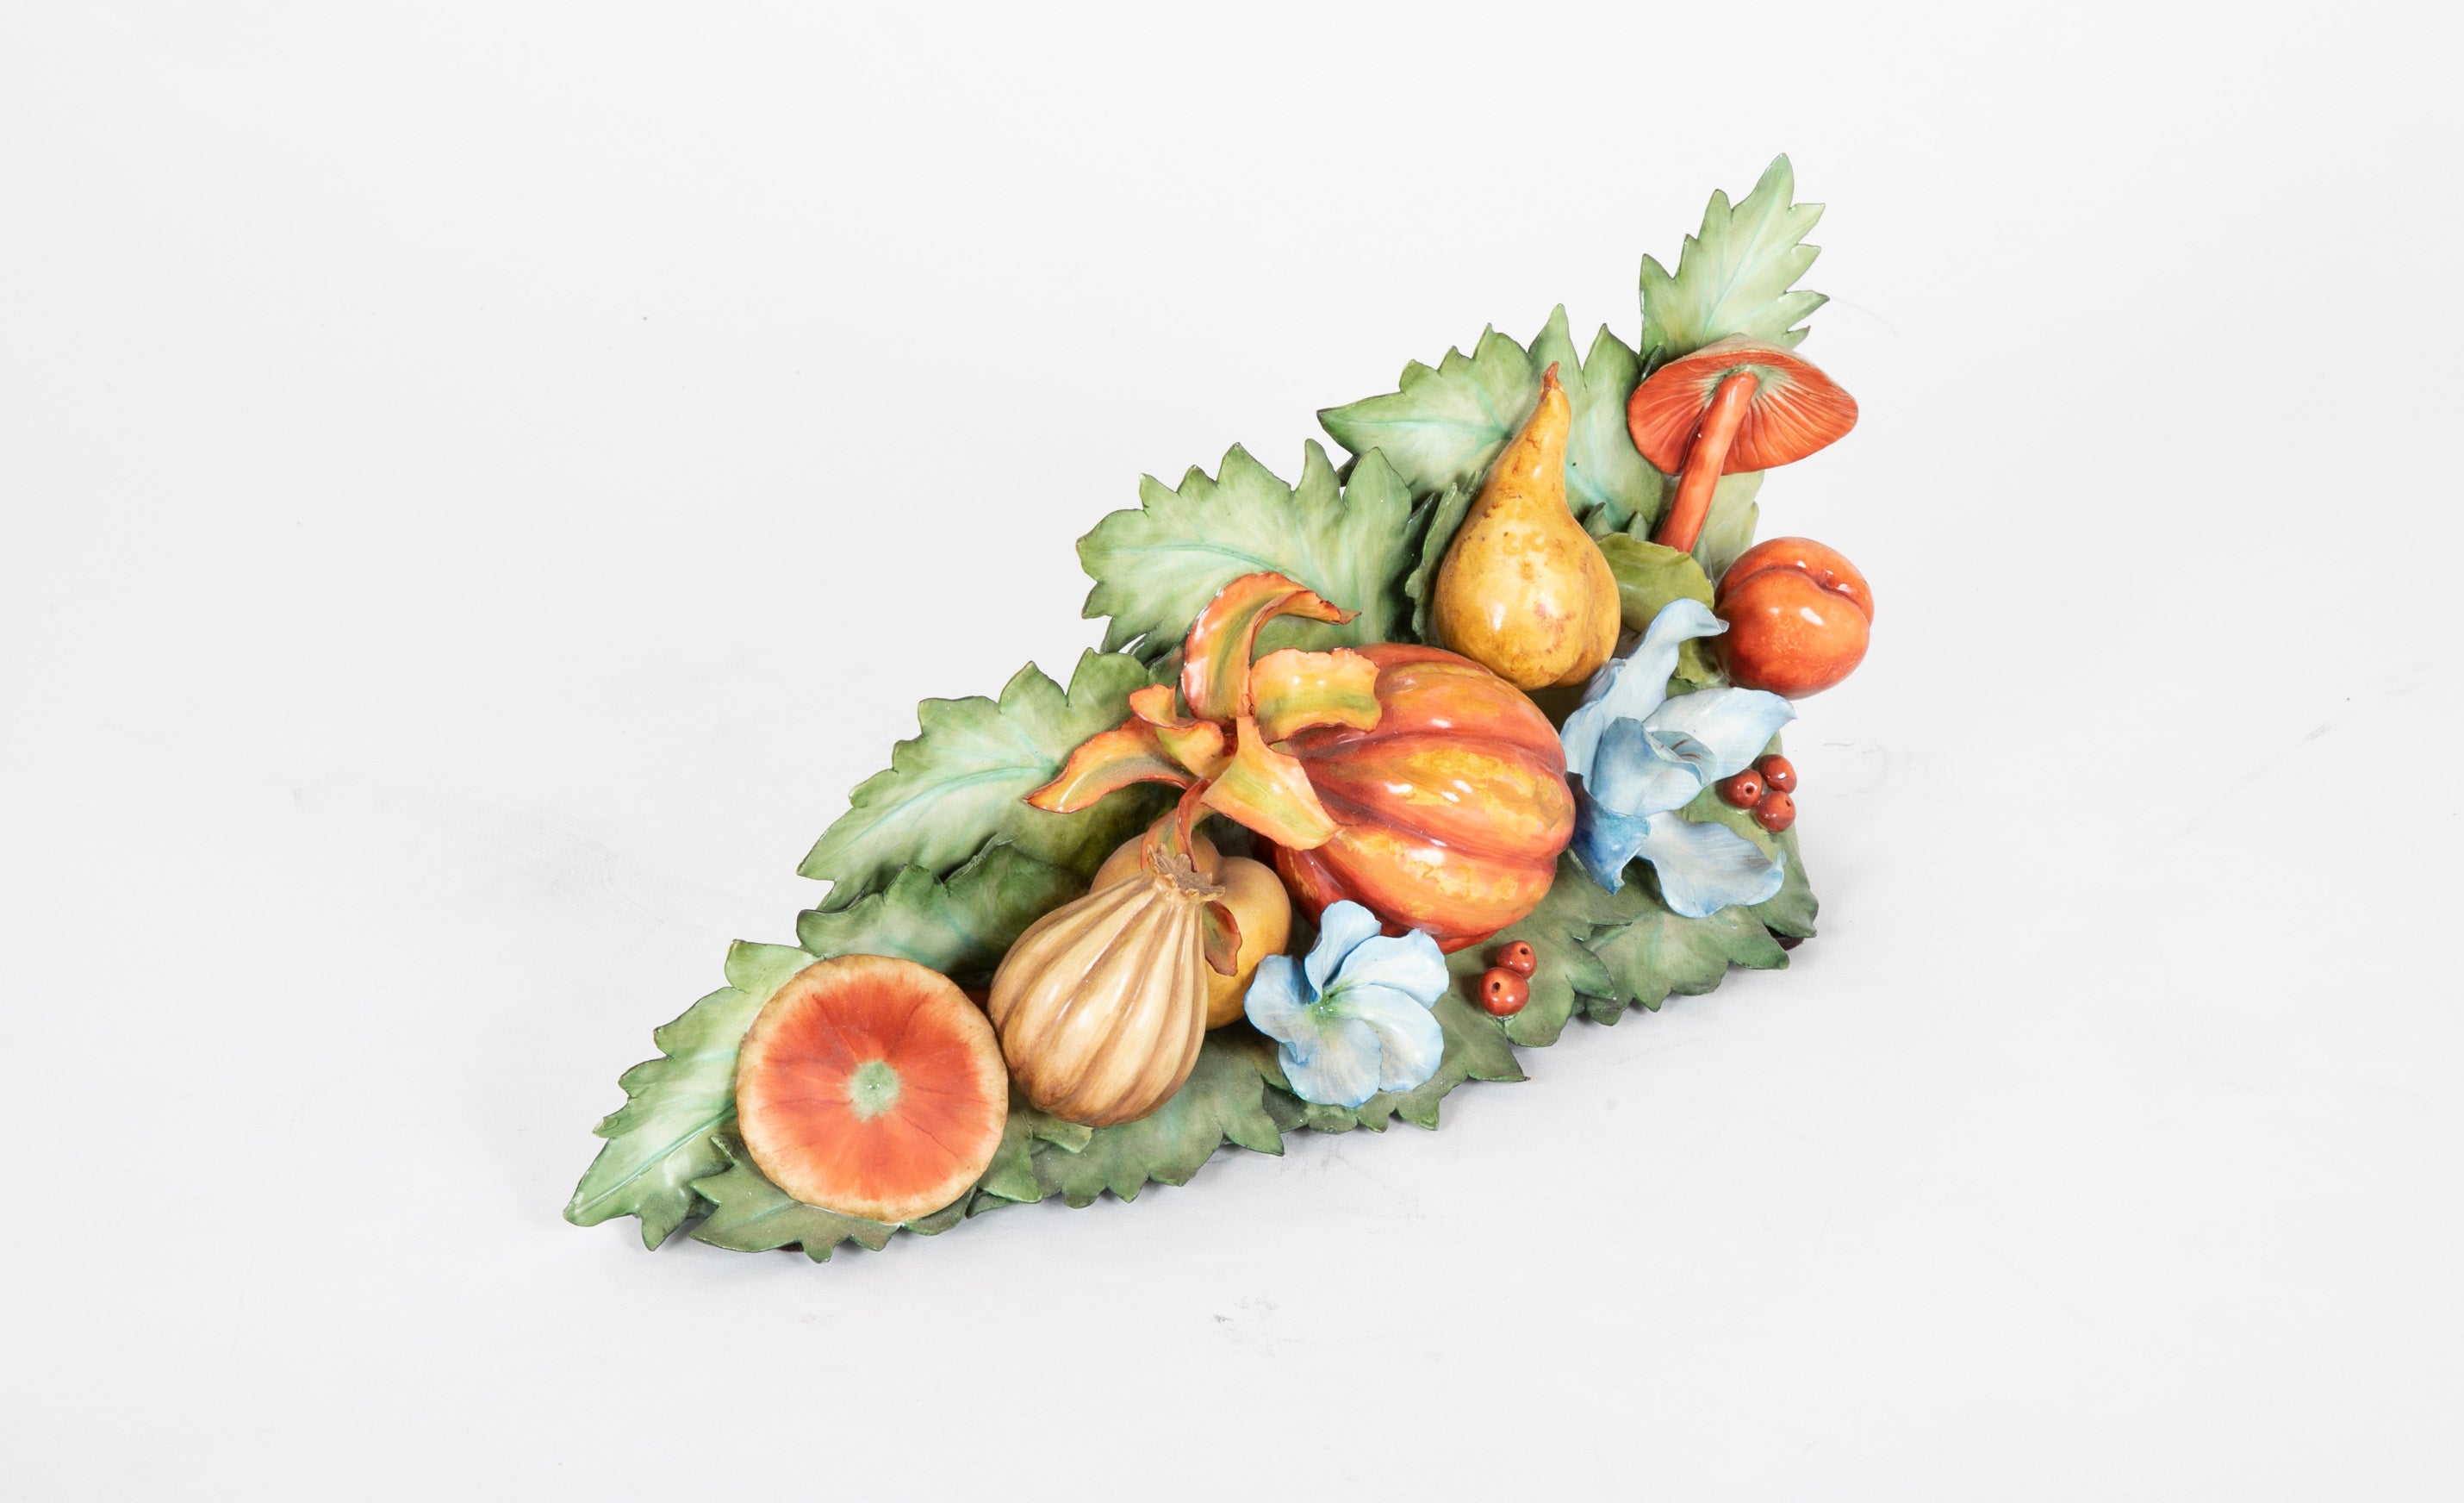 Large 3 Part Porcelain Garniture Set with Fruit, Flowers & Vegetables by Katherine Houston